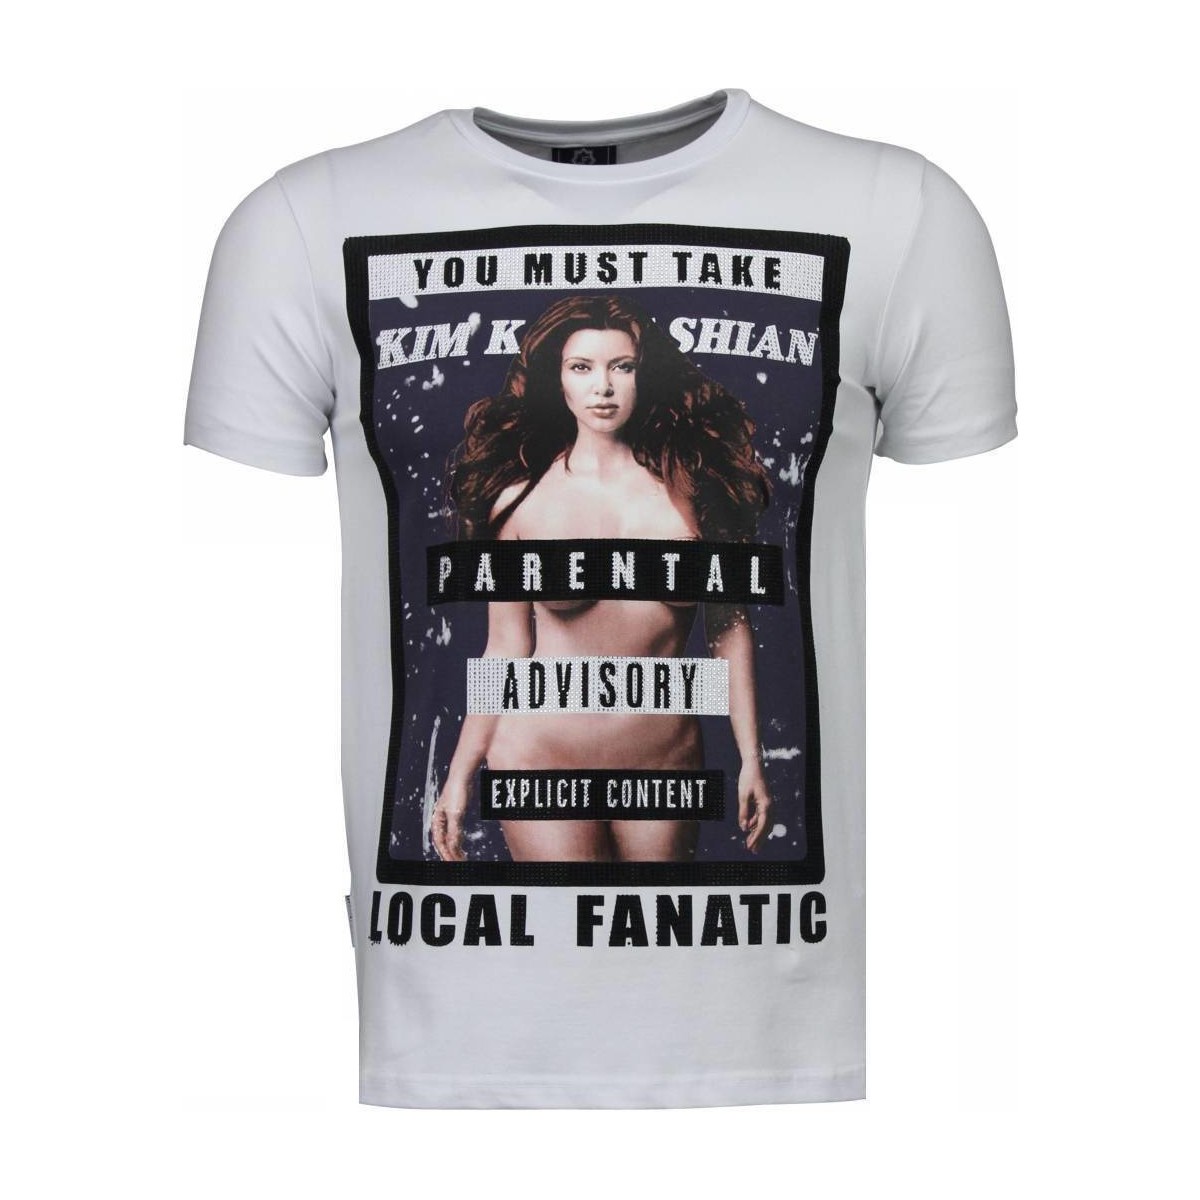 Kleidung Herren T-Shirts Local Fanatic Kim Kardashian Strass Weiss